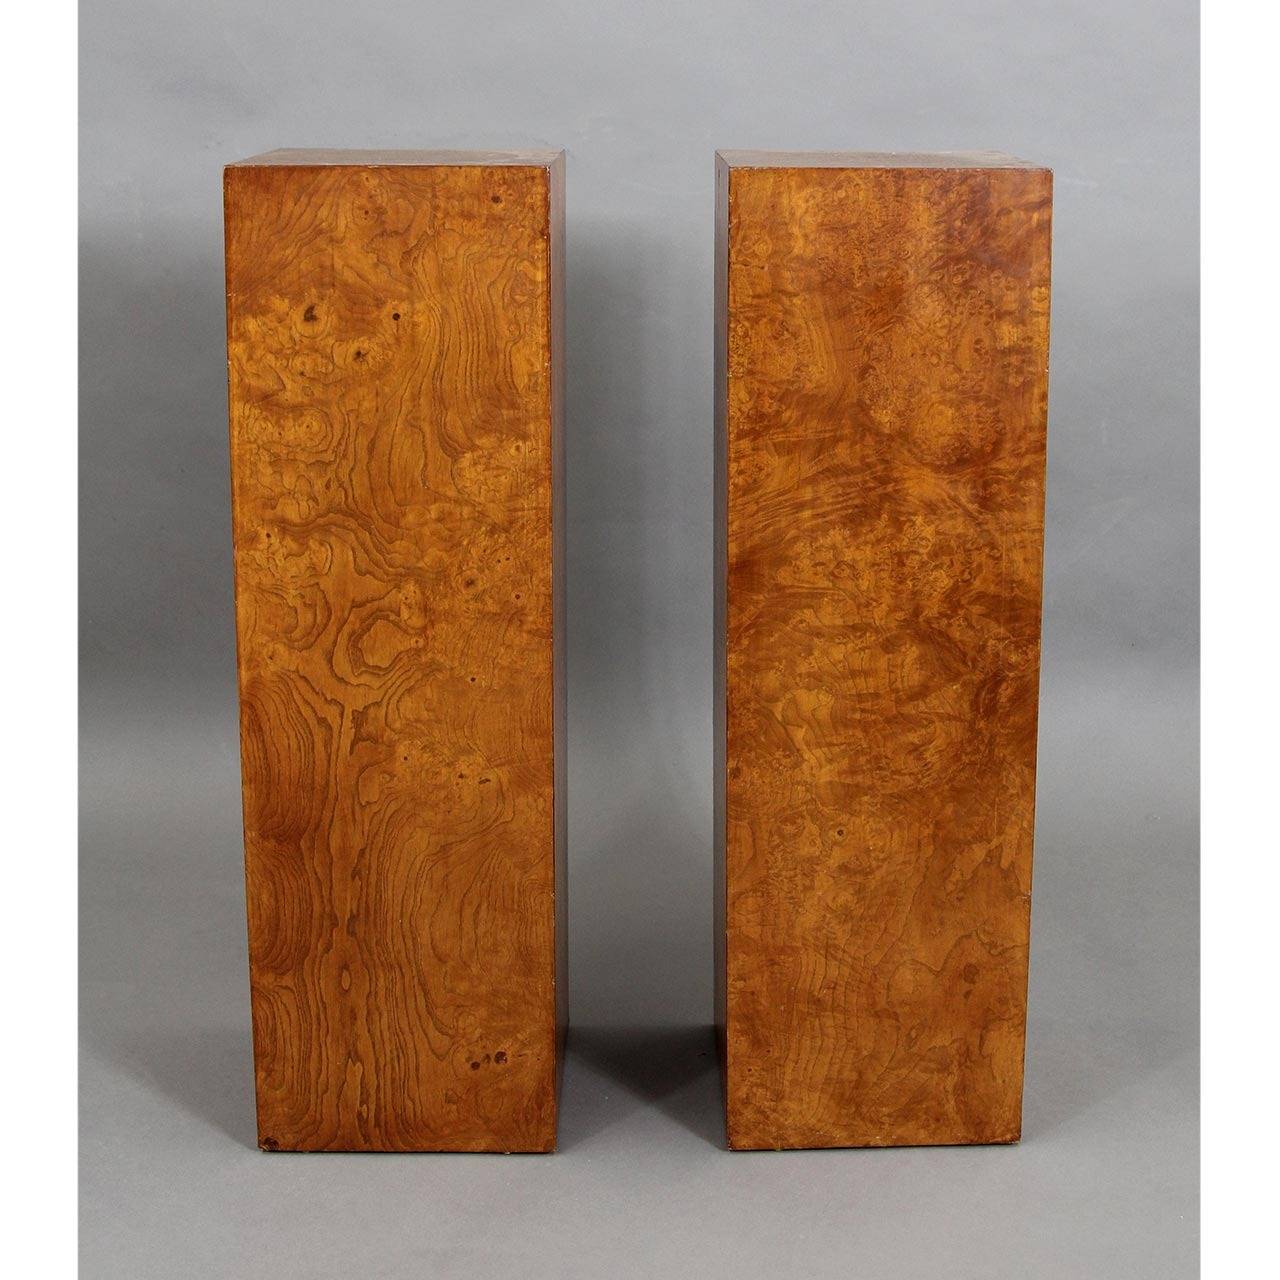 Pair of 36 inch tall burl wood pedestals.